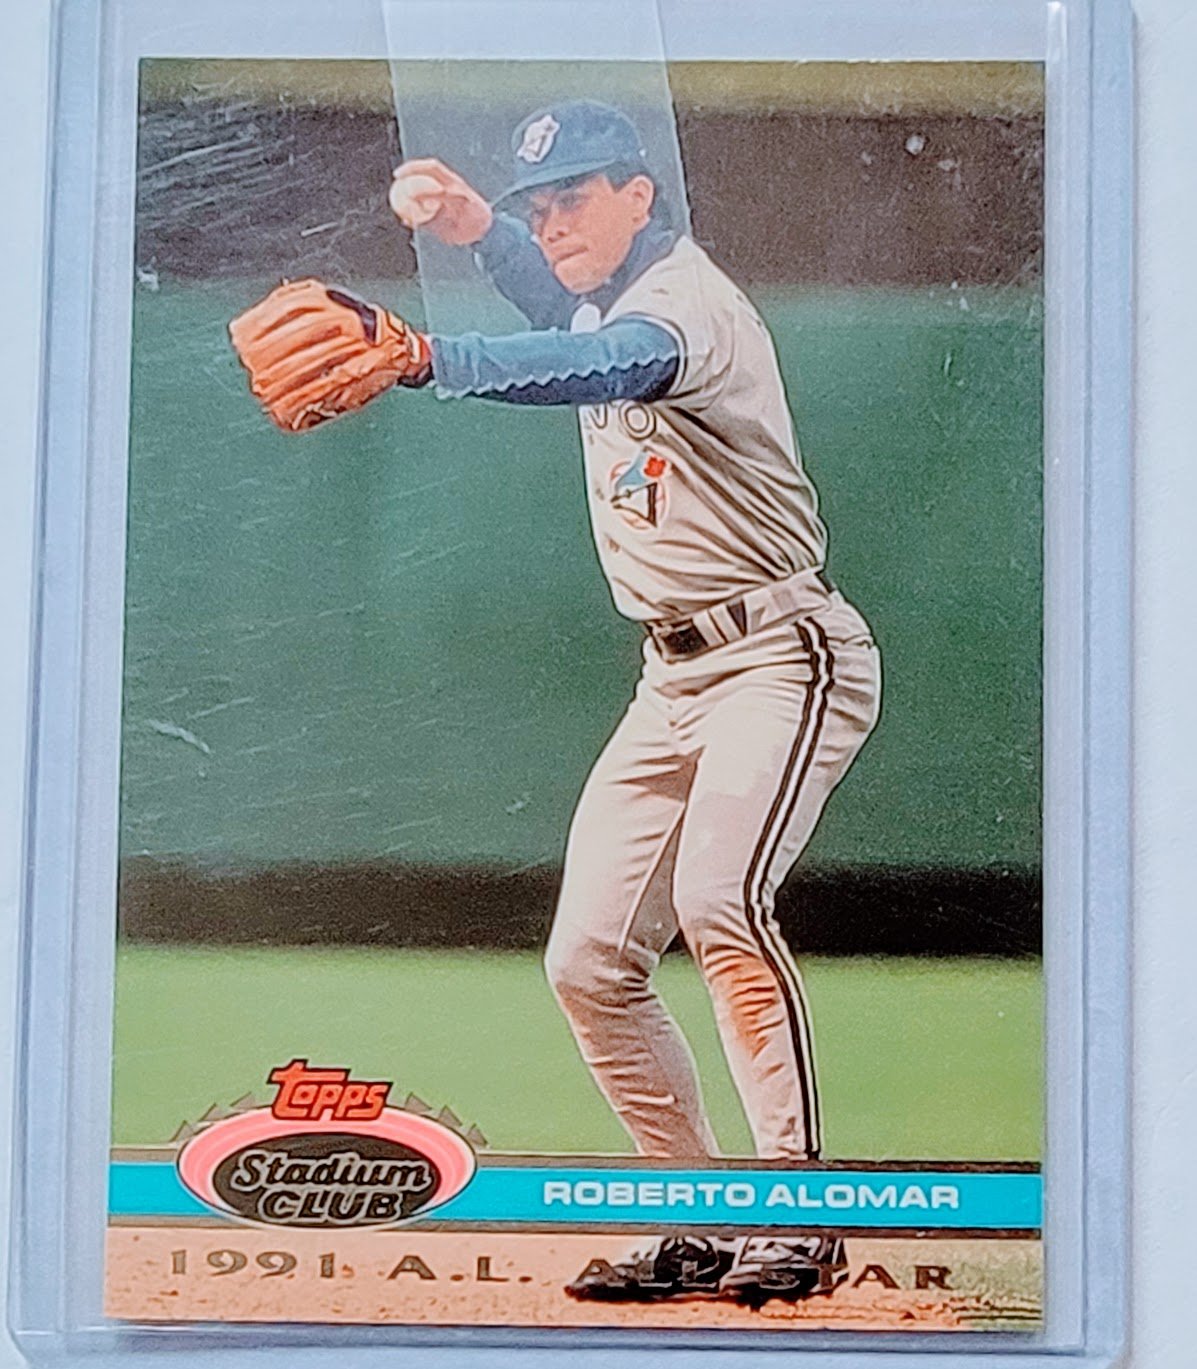 1992 Topps Stadium Club Dome Roberto Alomar 1991 All Star MLB Baseball